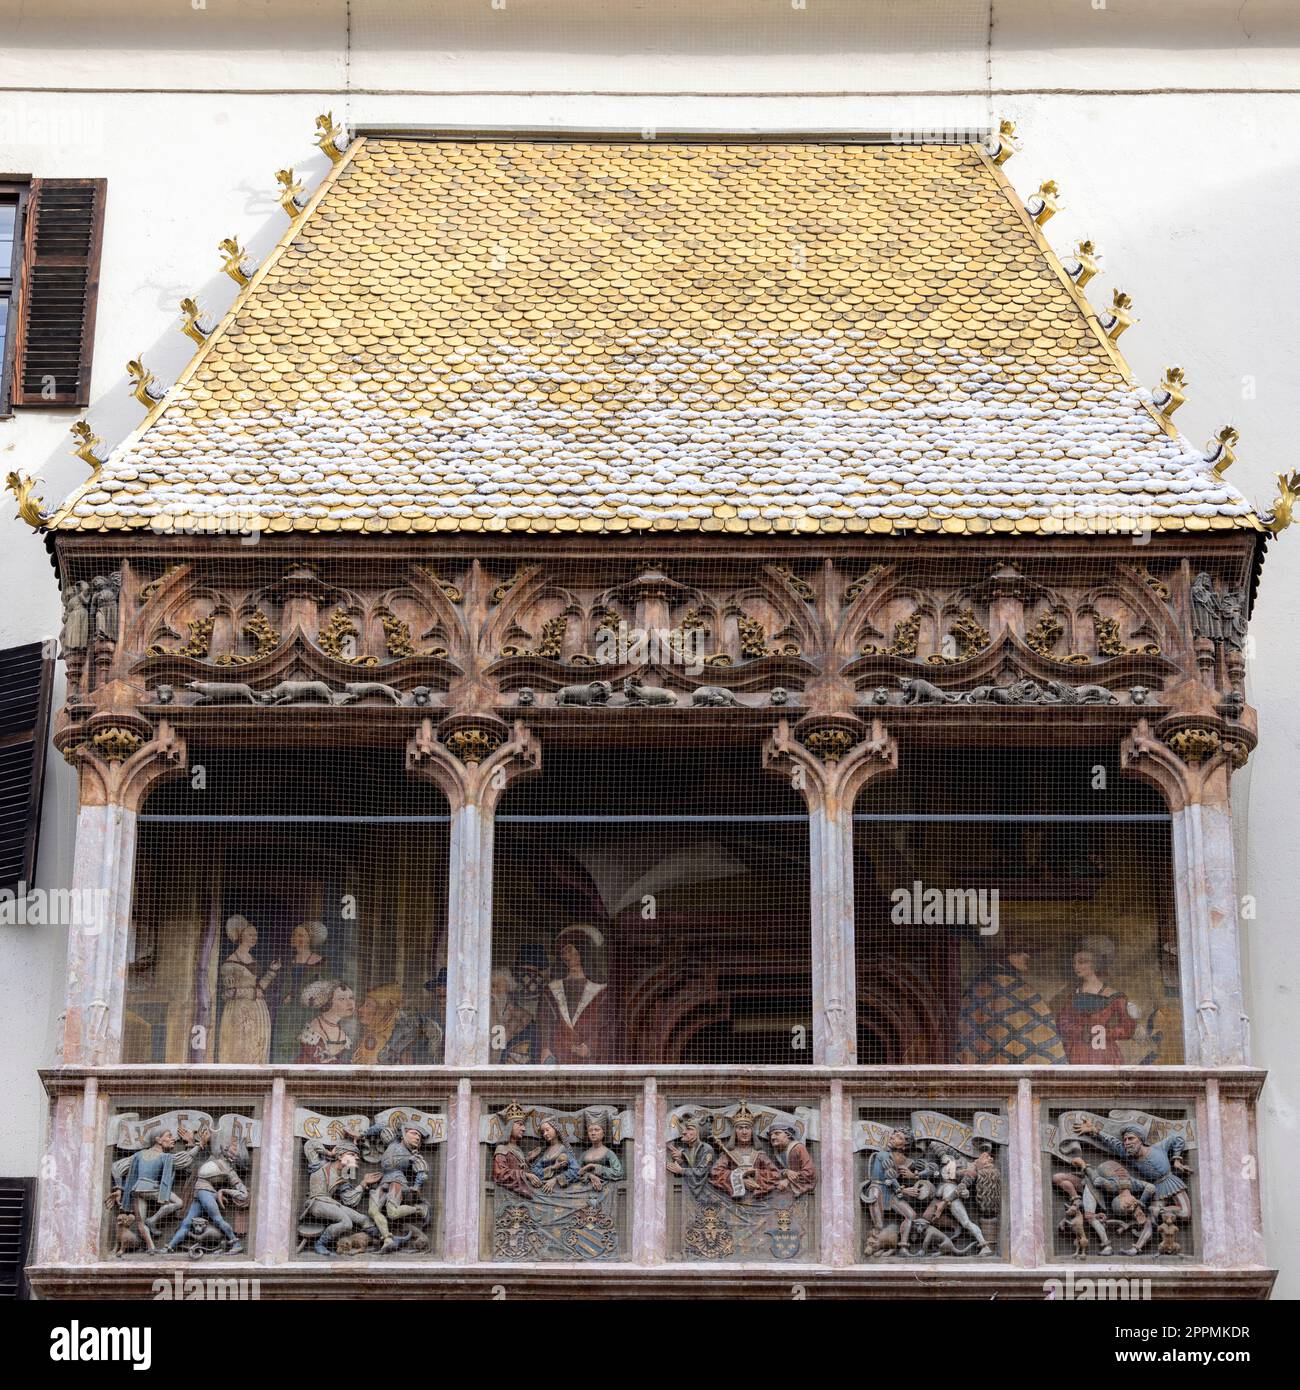 Goldenes Dachl ( Golden Roof), decorative balcony, Innsbruck  Austria Stock Photo